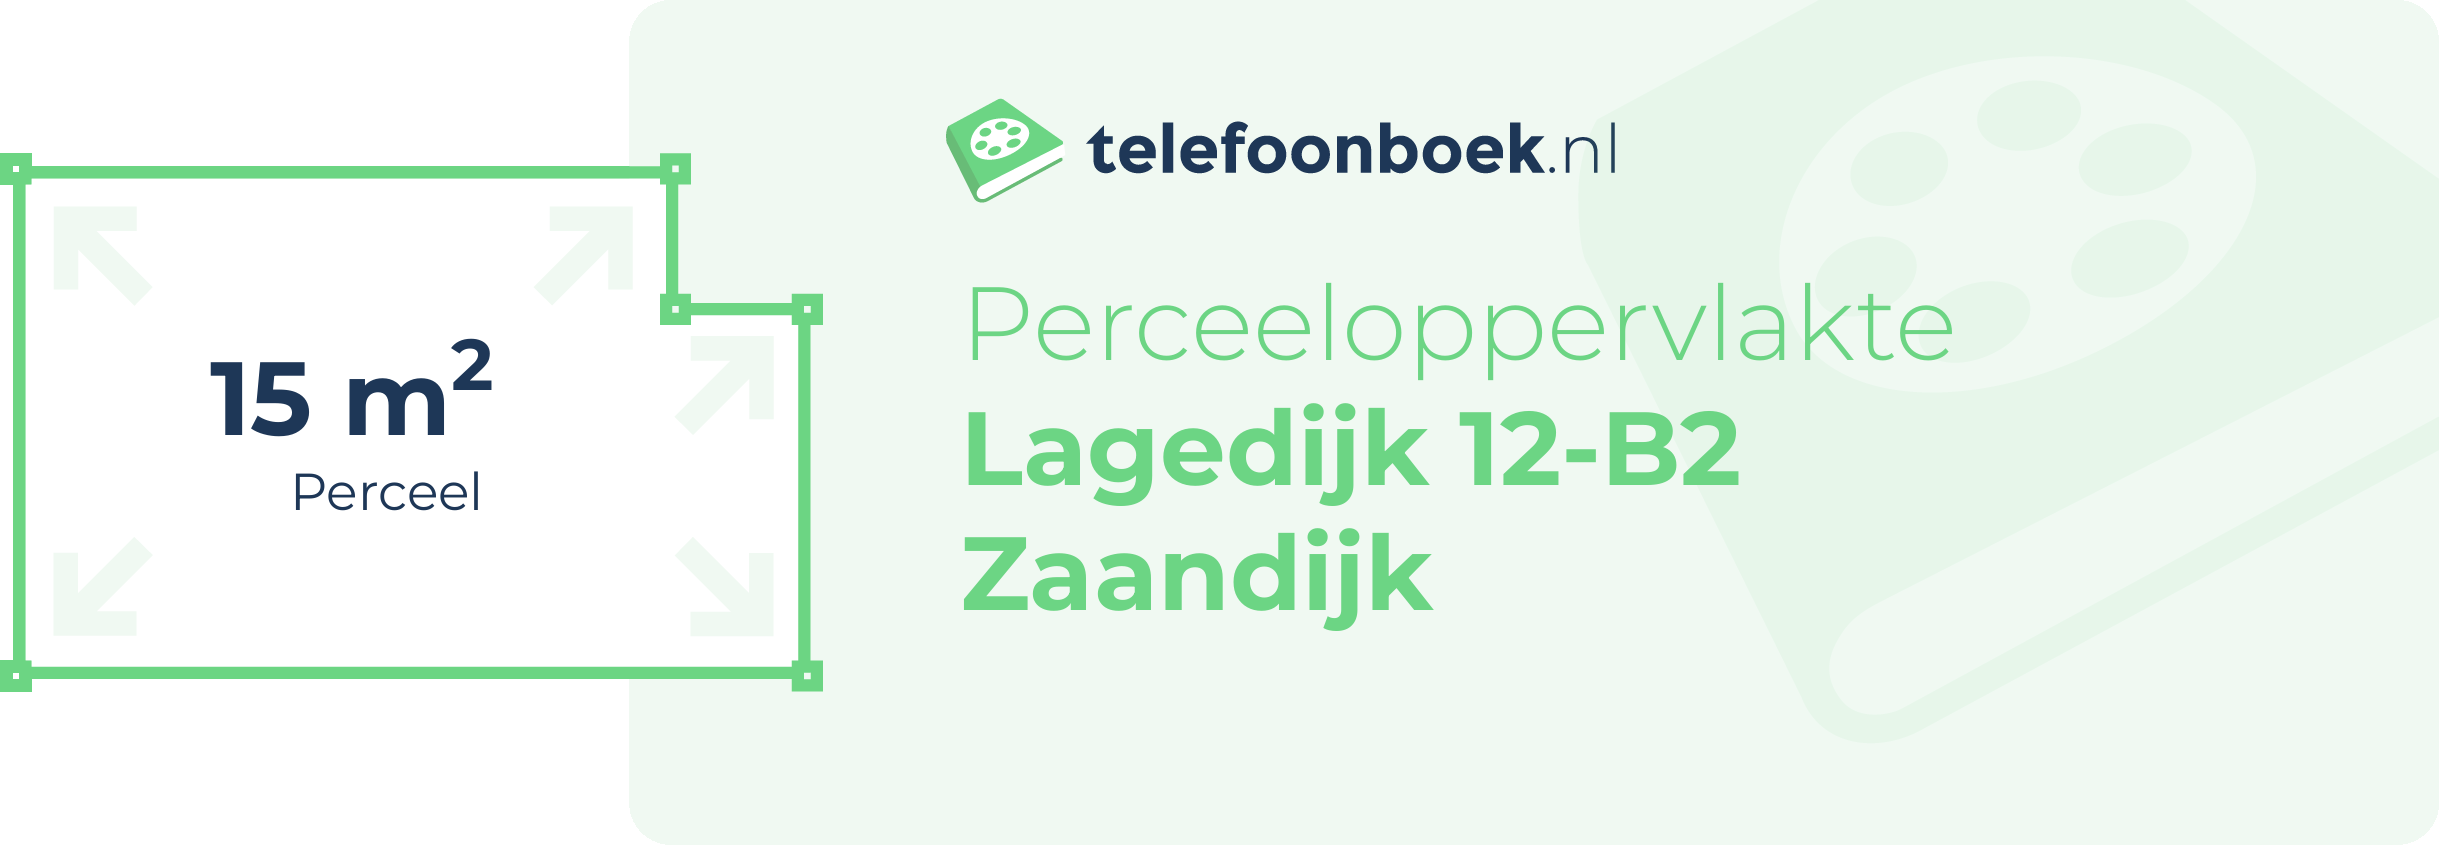 Perceeloppervlakte Lagedijk 12-B2 Zaandijk